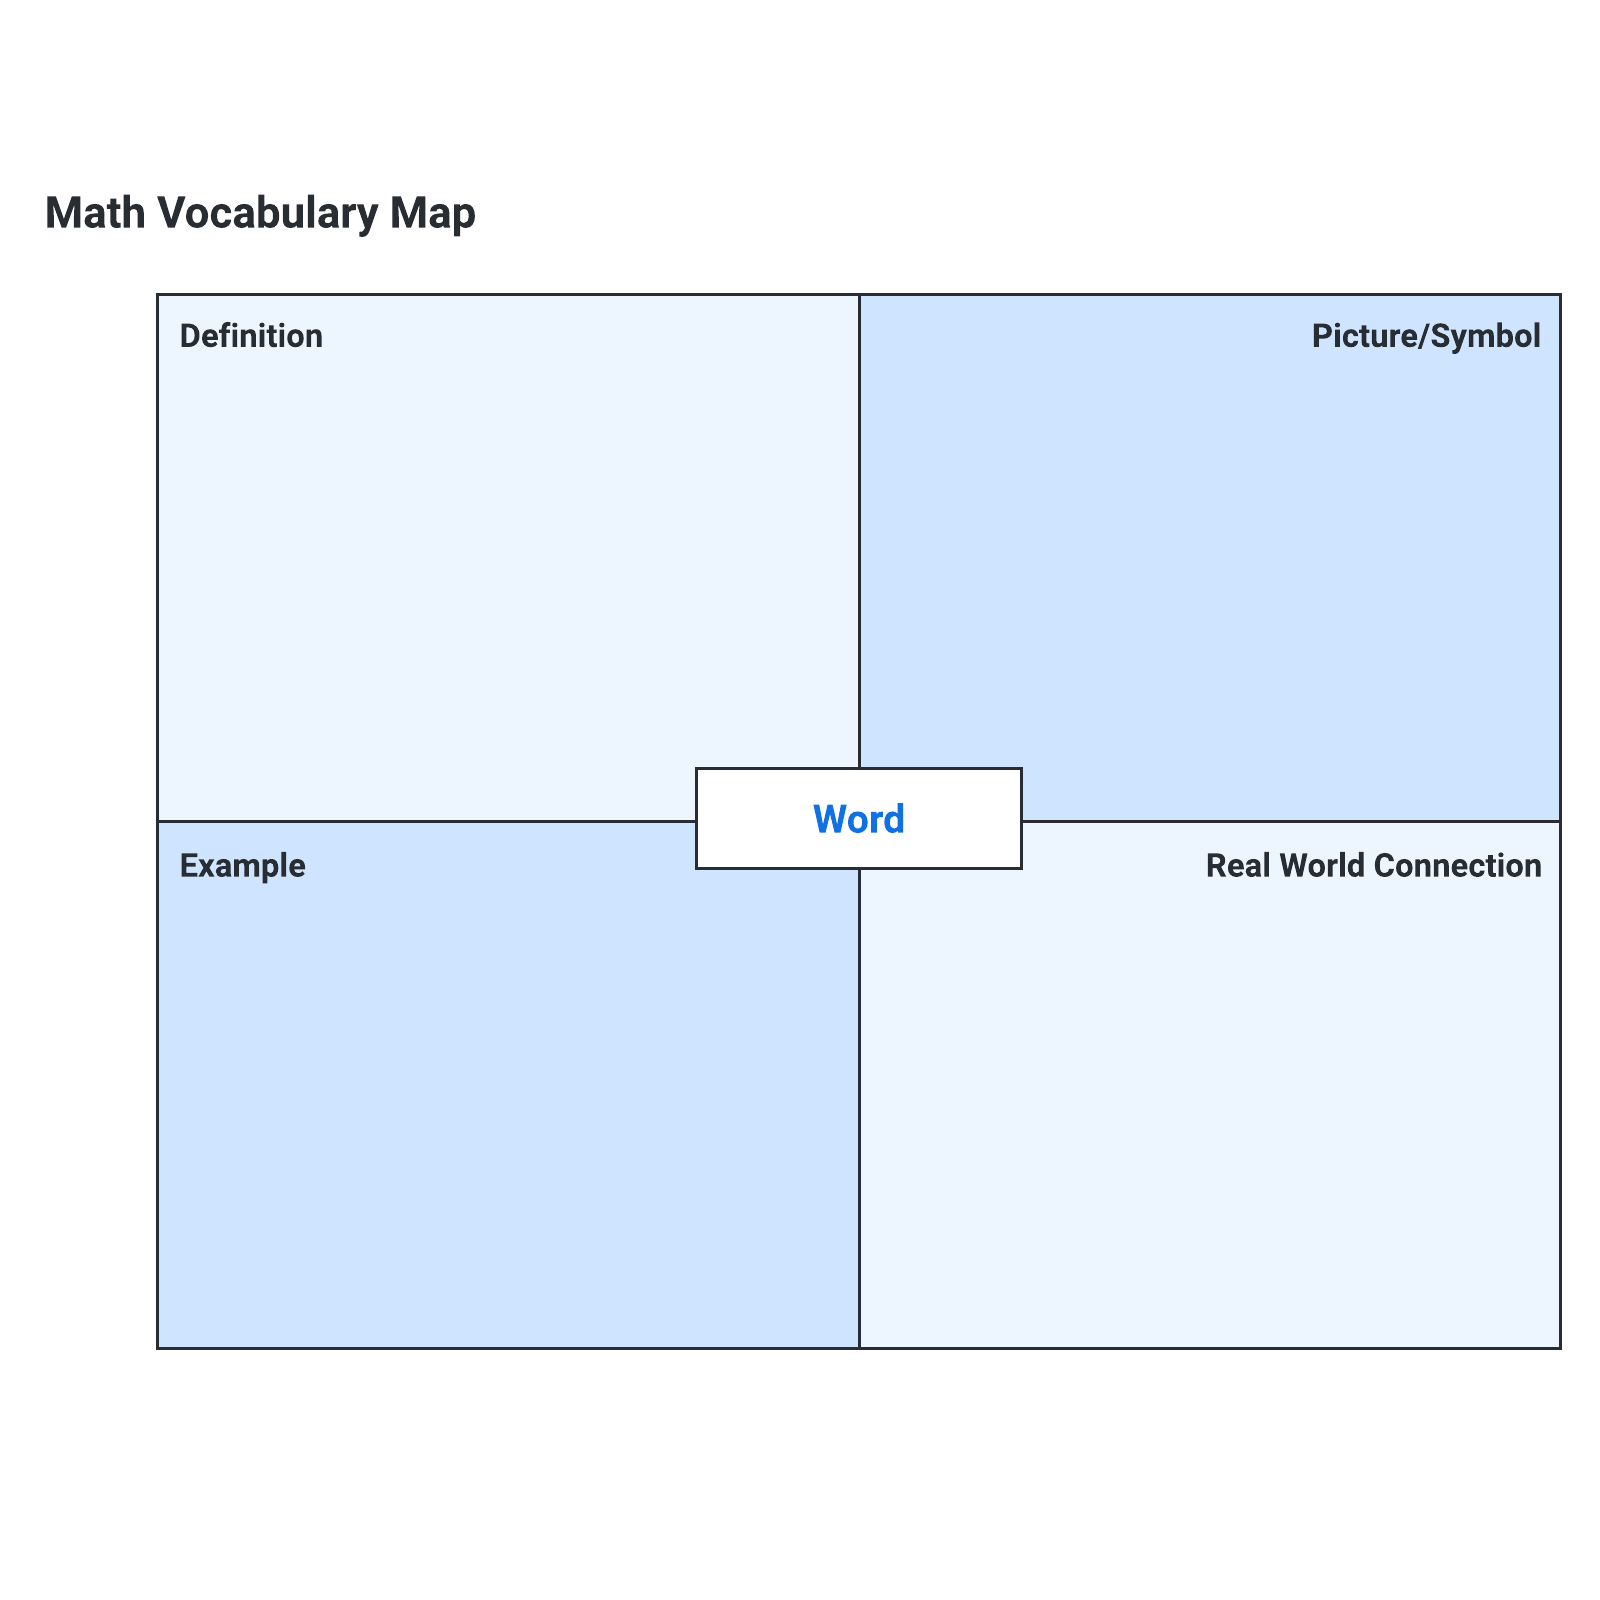 Math vocabulary map example